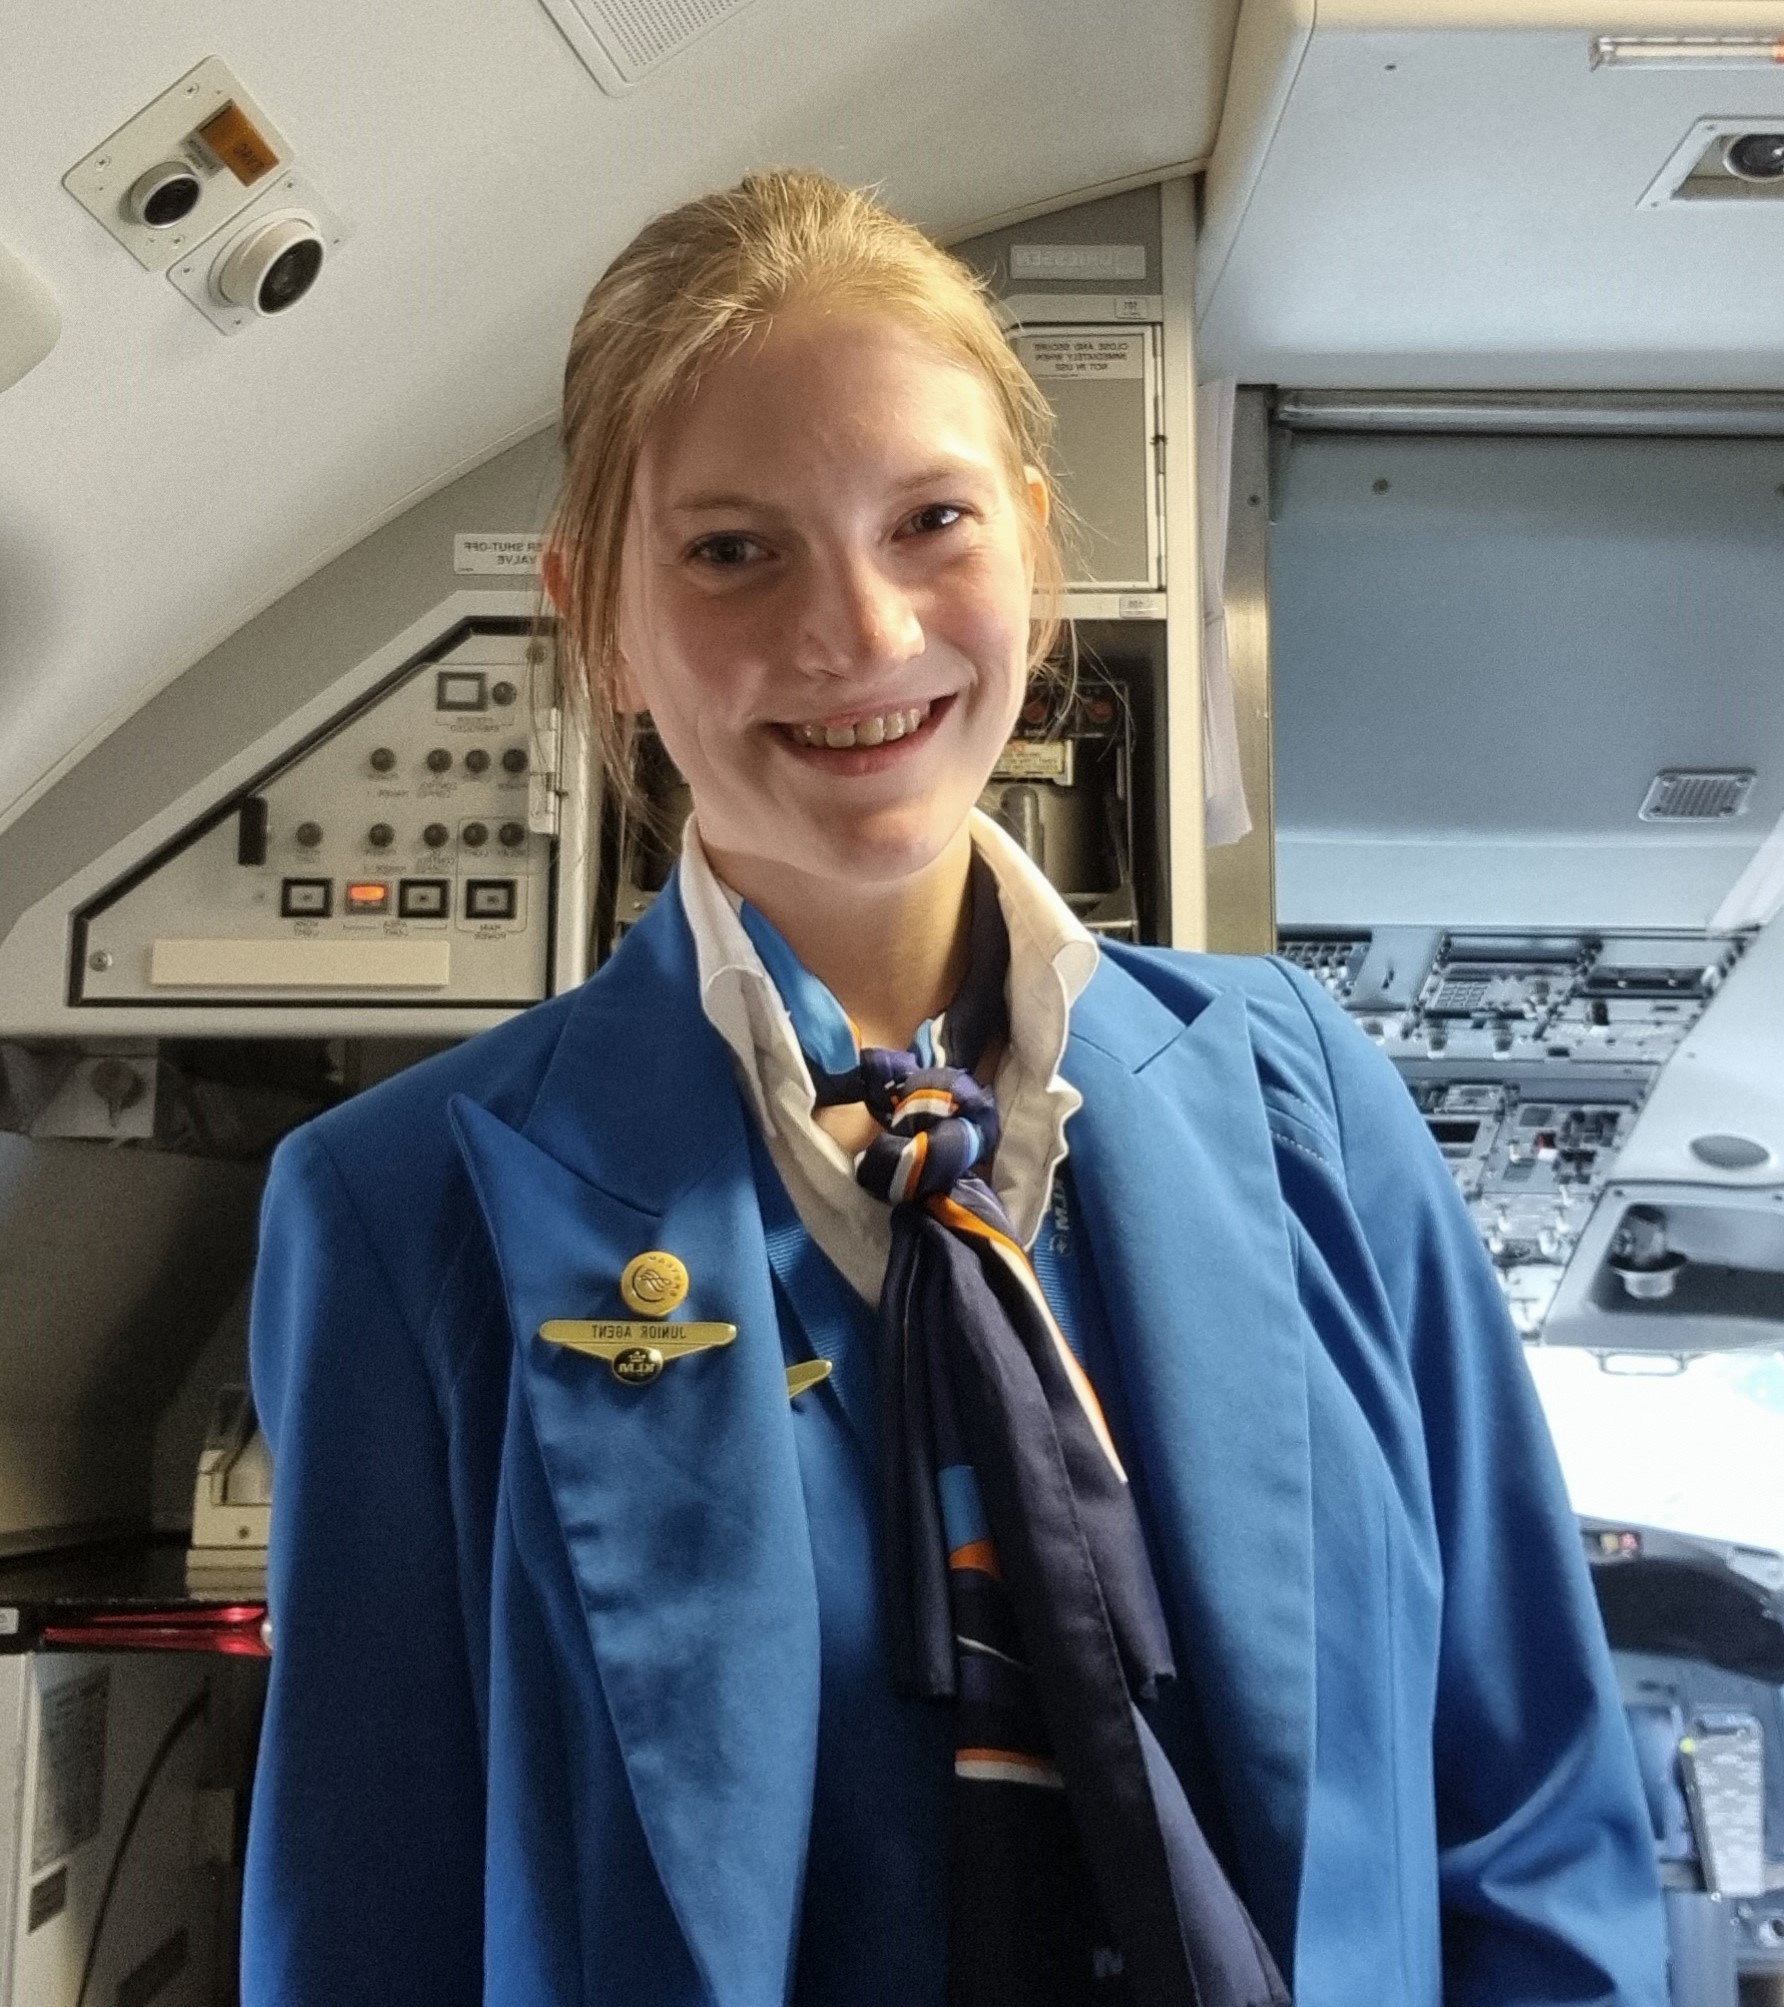 Gastblog Shayenna Van gepest meisje KLM-stewardess - Wij hebben een schisis